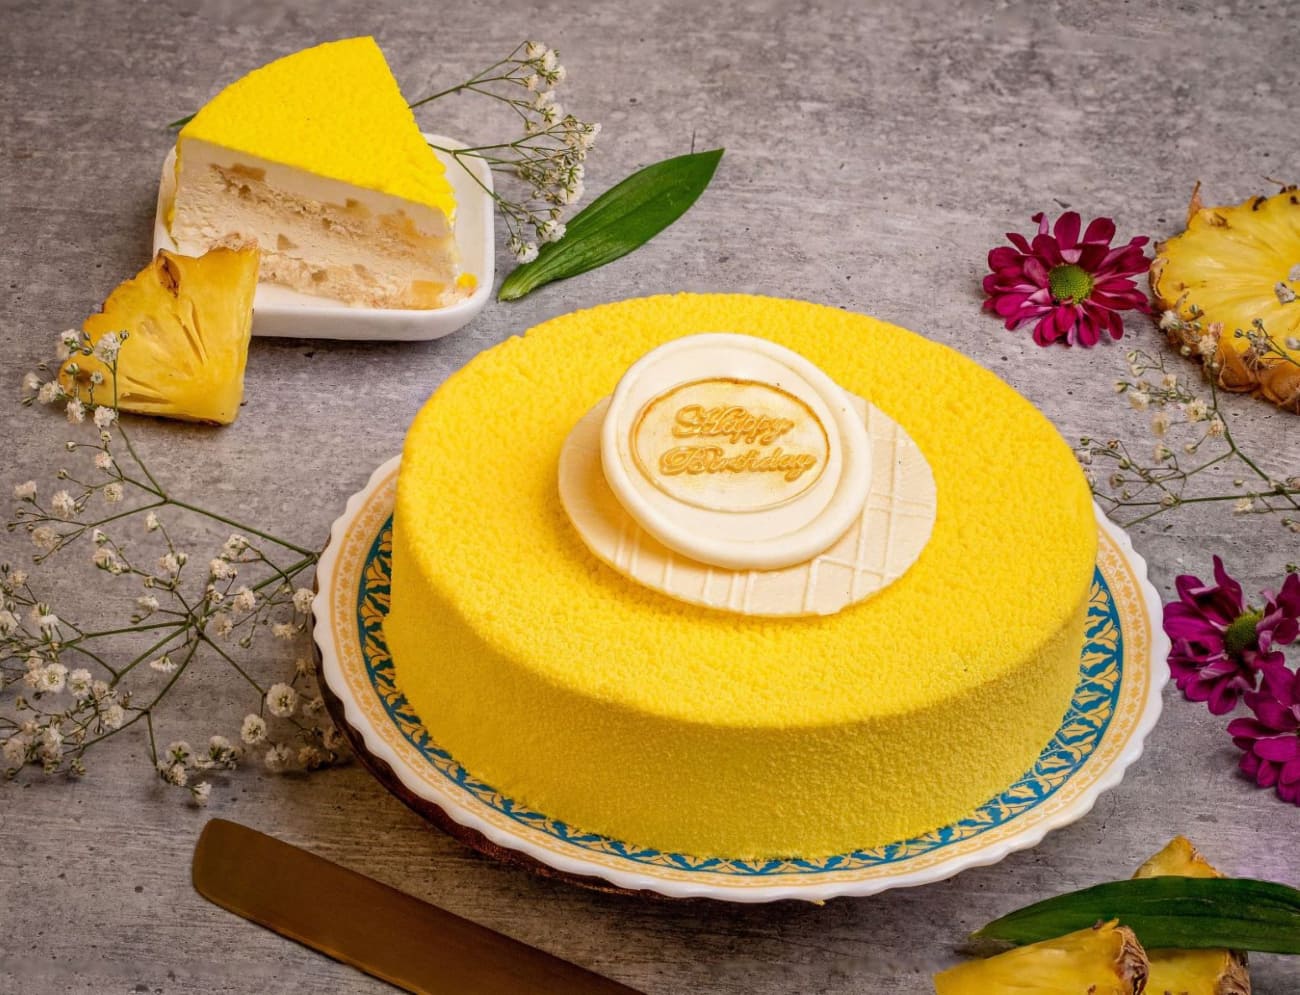 Sunfeast Caker Layered with Butterscotch Flavour😋#asmr#cake#chocolate#layeredcake#candy#butterscotch  - YouTube